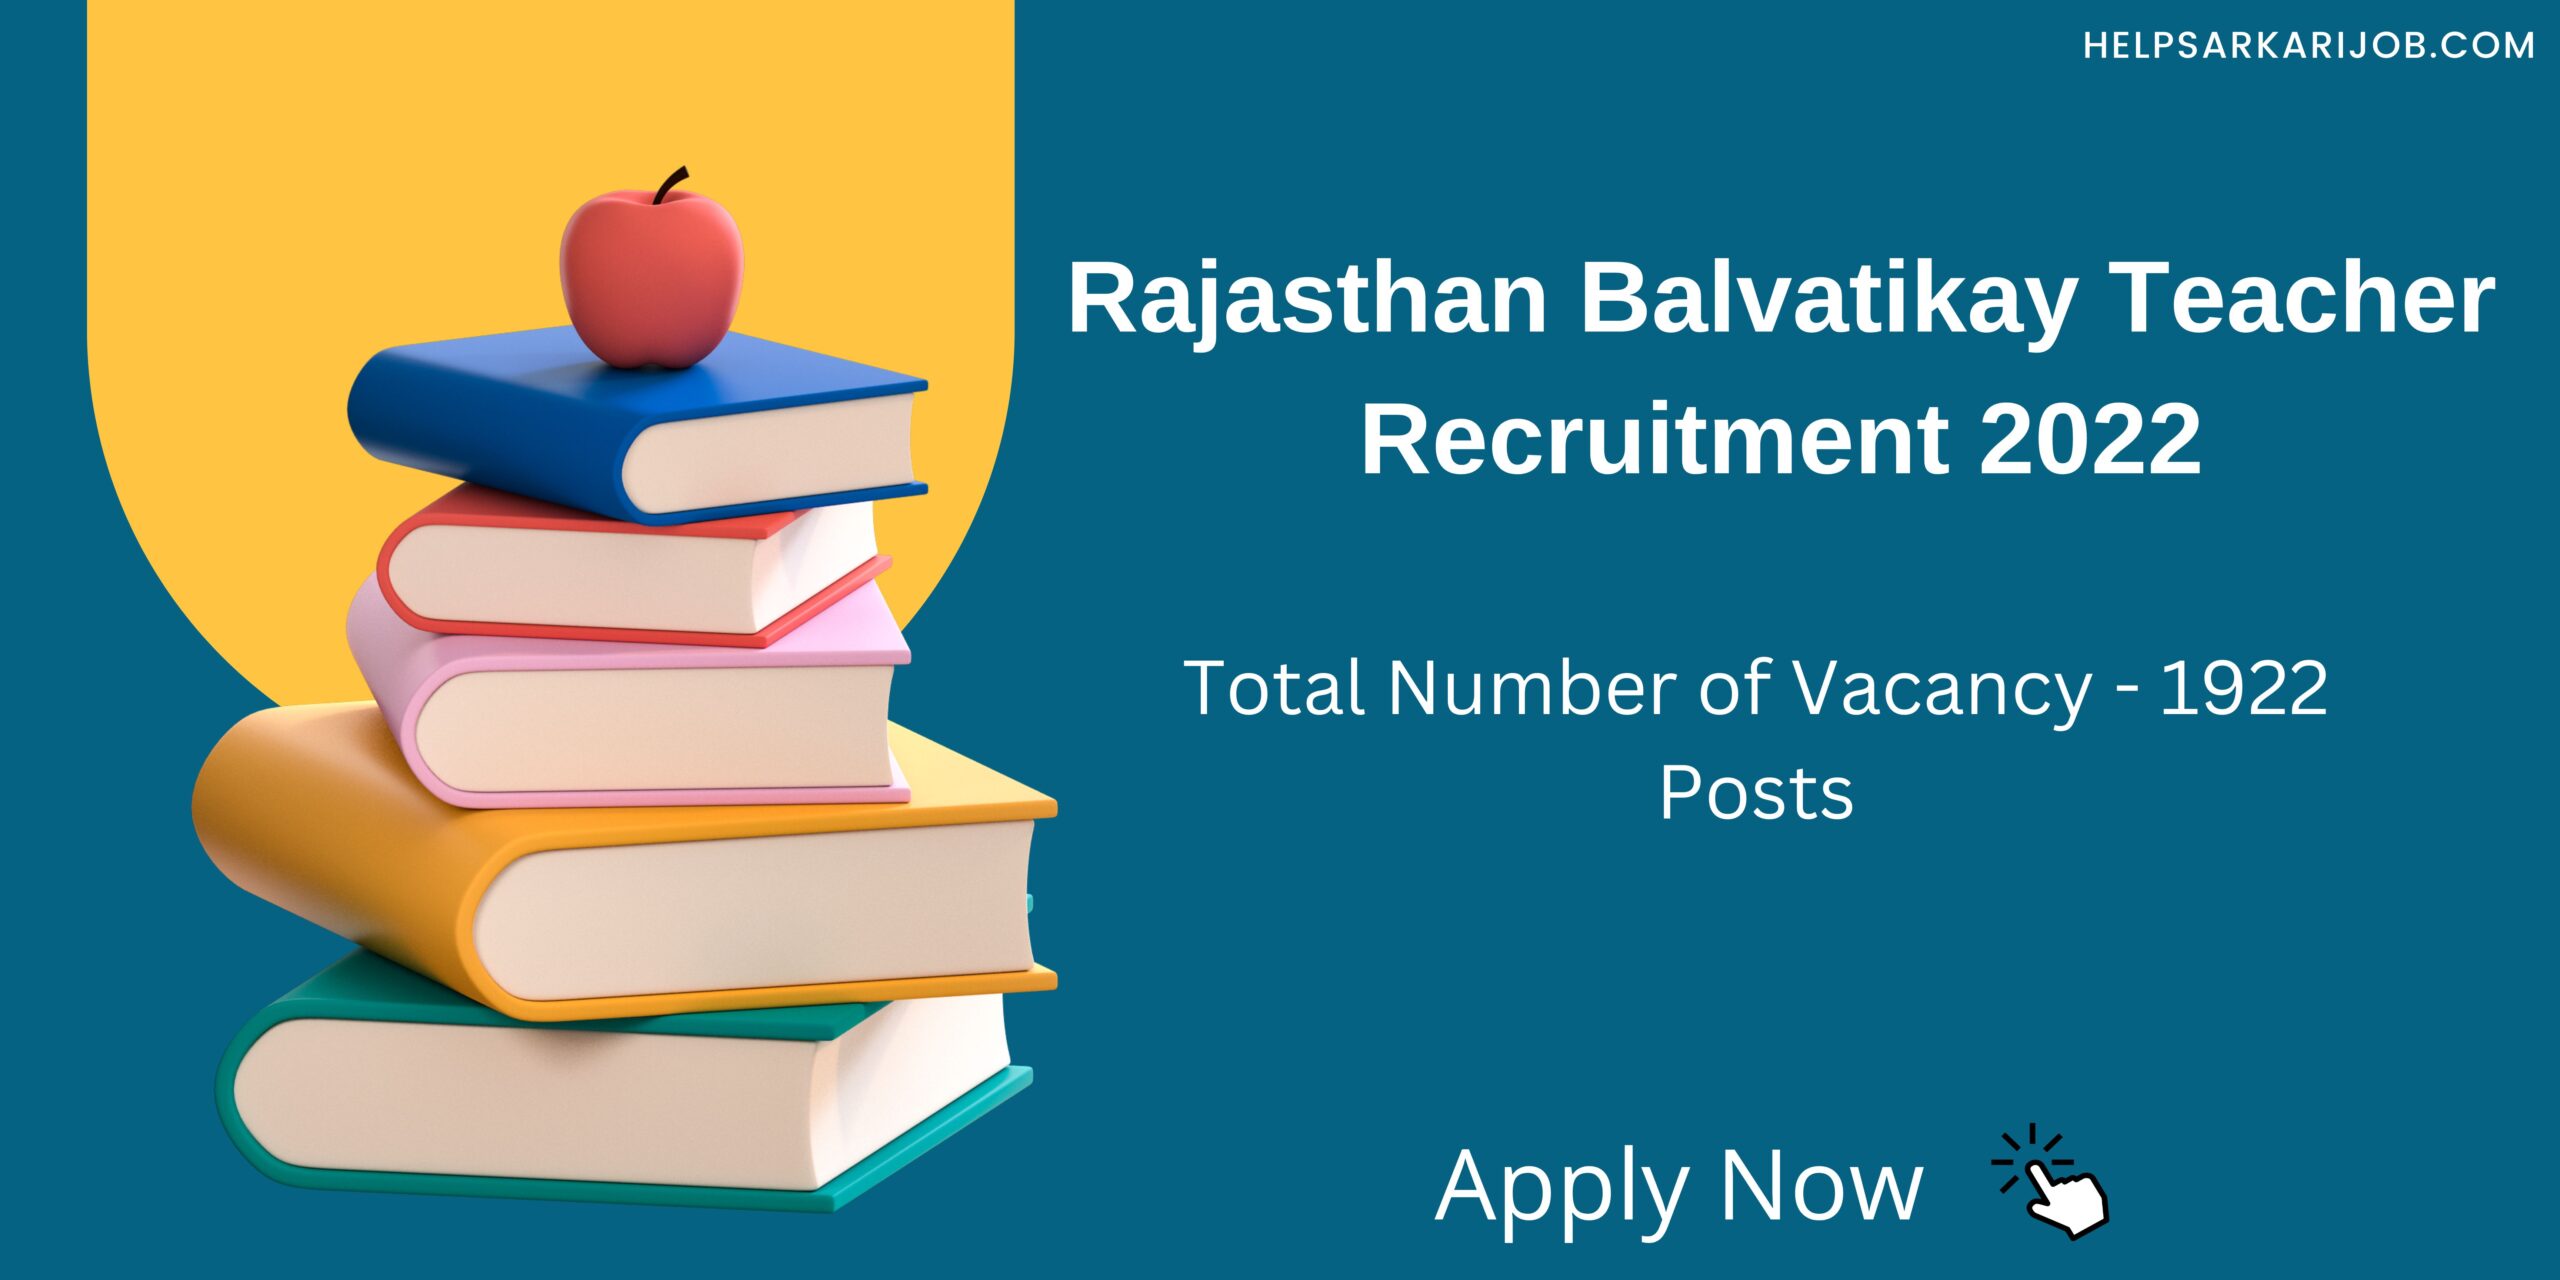 Rajasthan Balvatikay Teacher Recruitment 2022